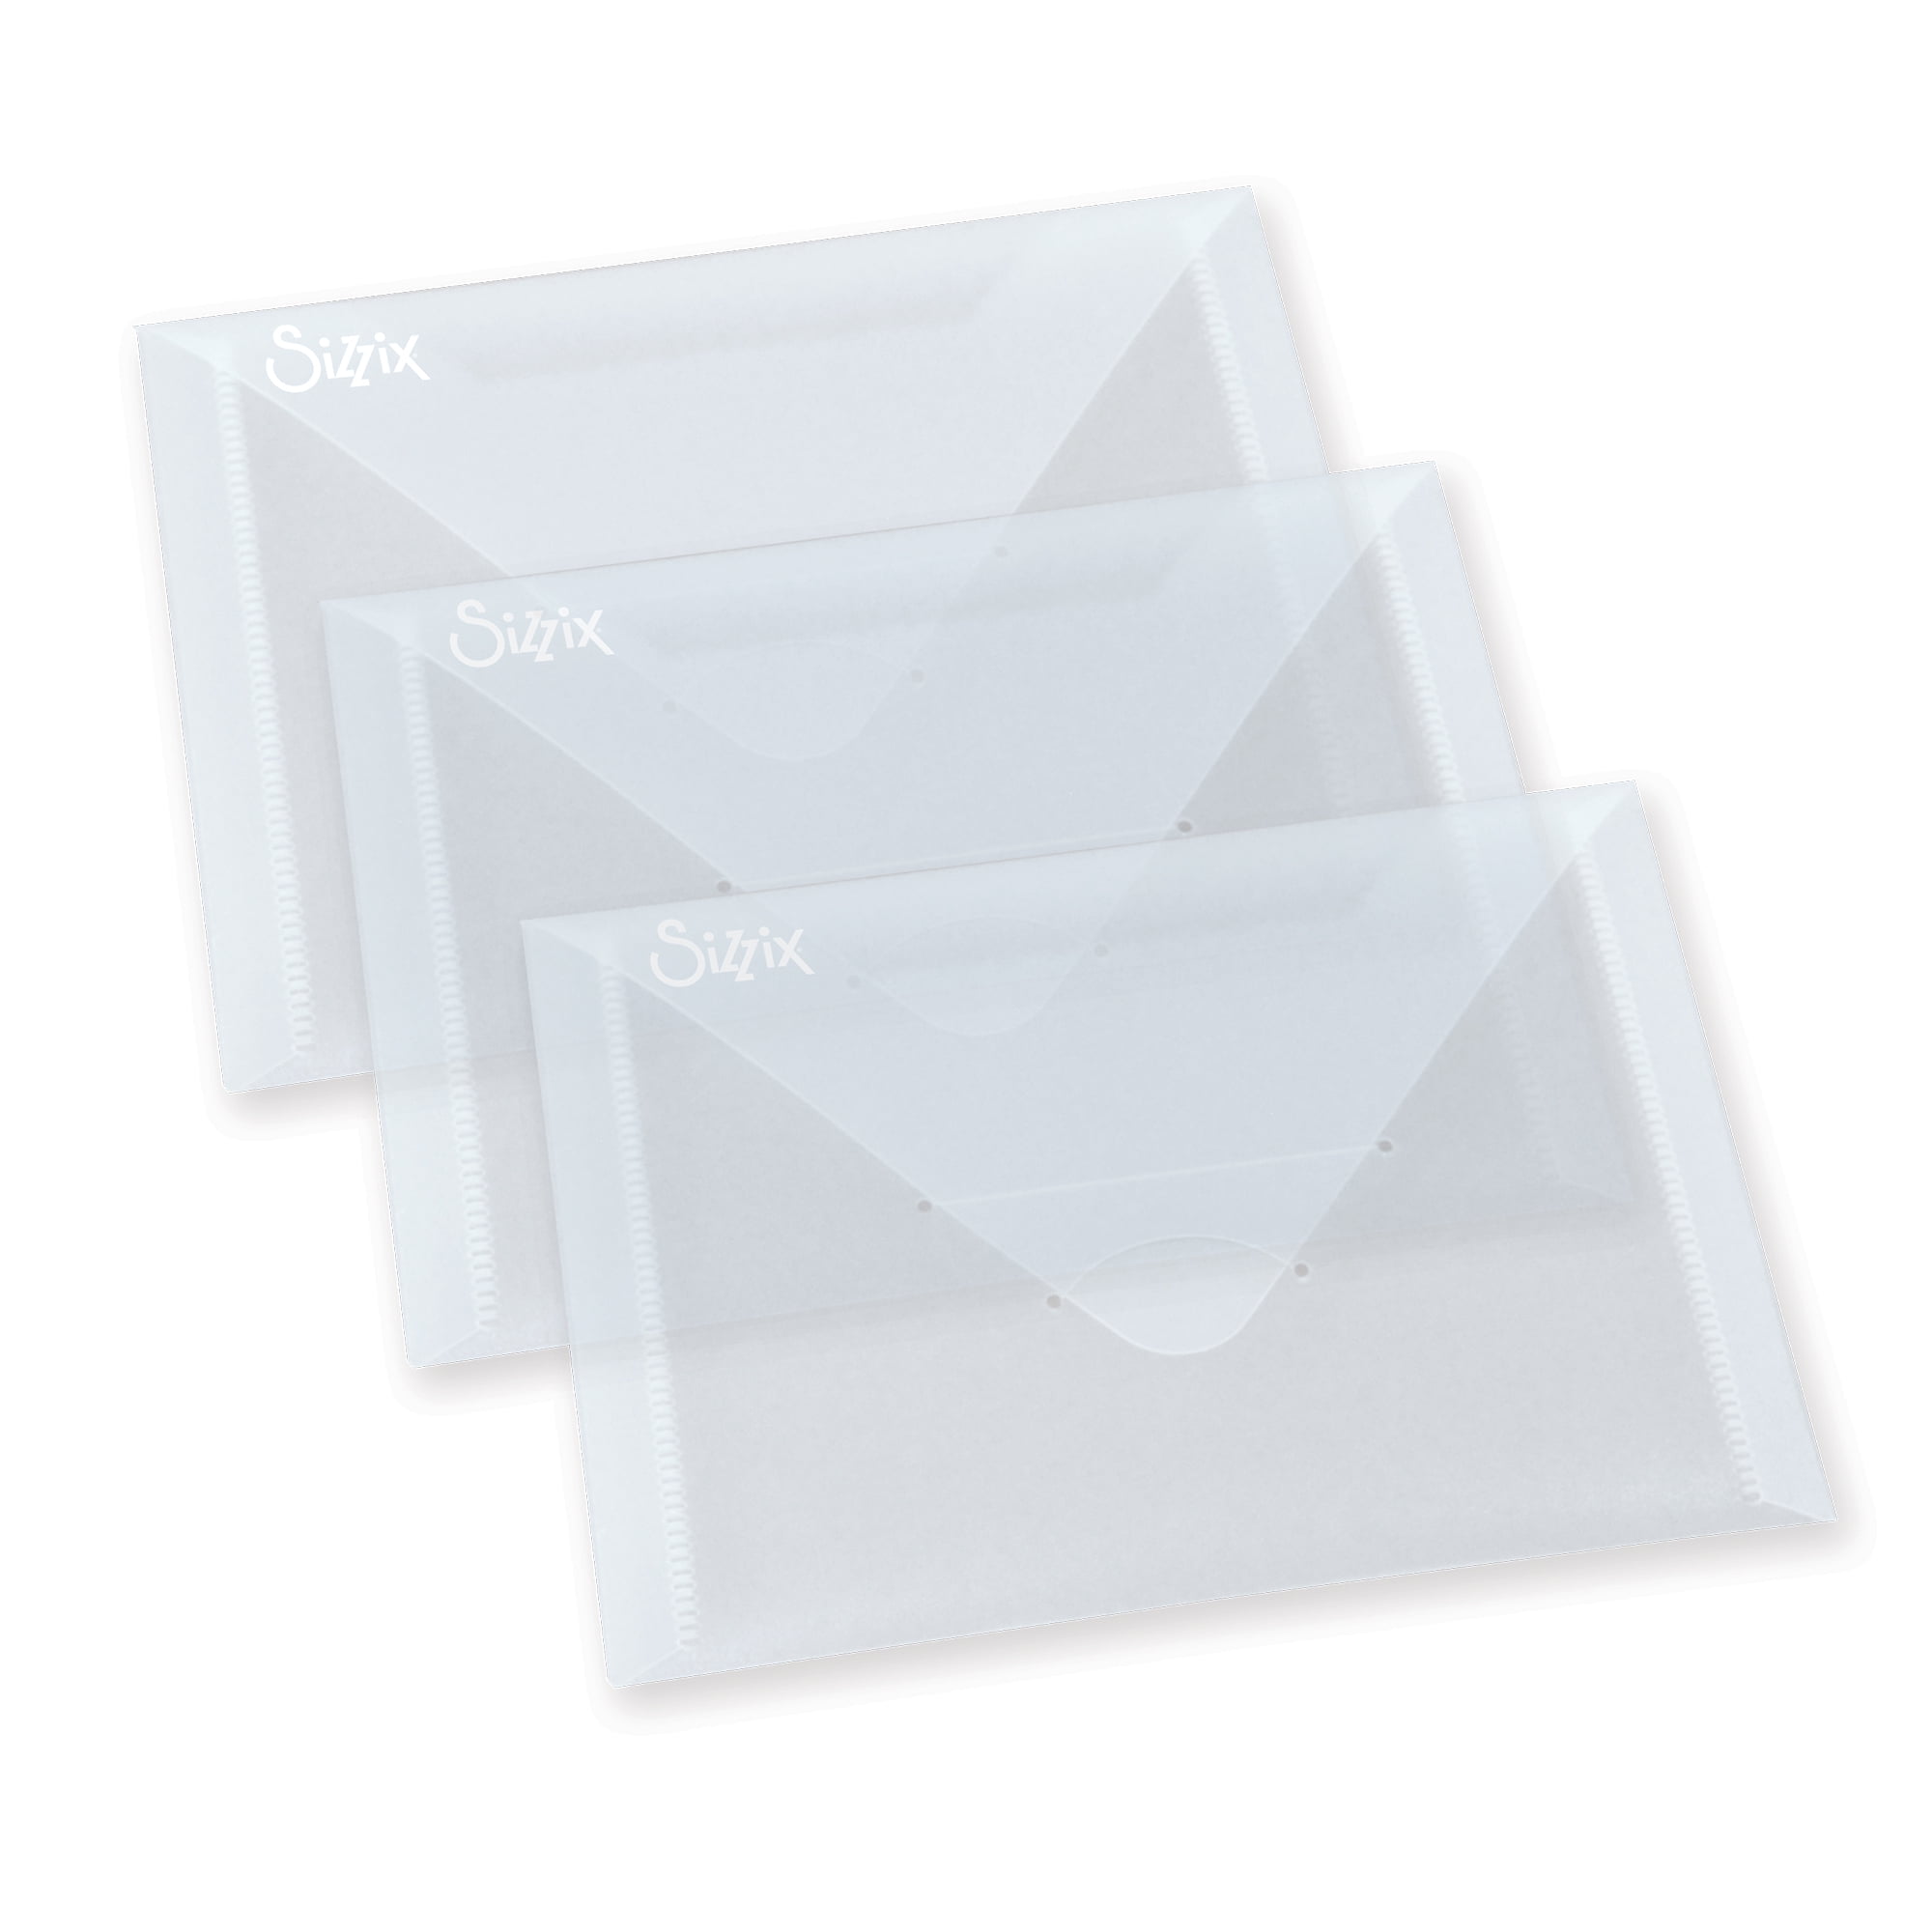 YESSART 5x7 Small Plastic Envelopes Hook Loop Closure Receipt Storage Holder 60 Pack